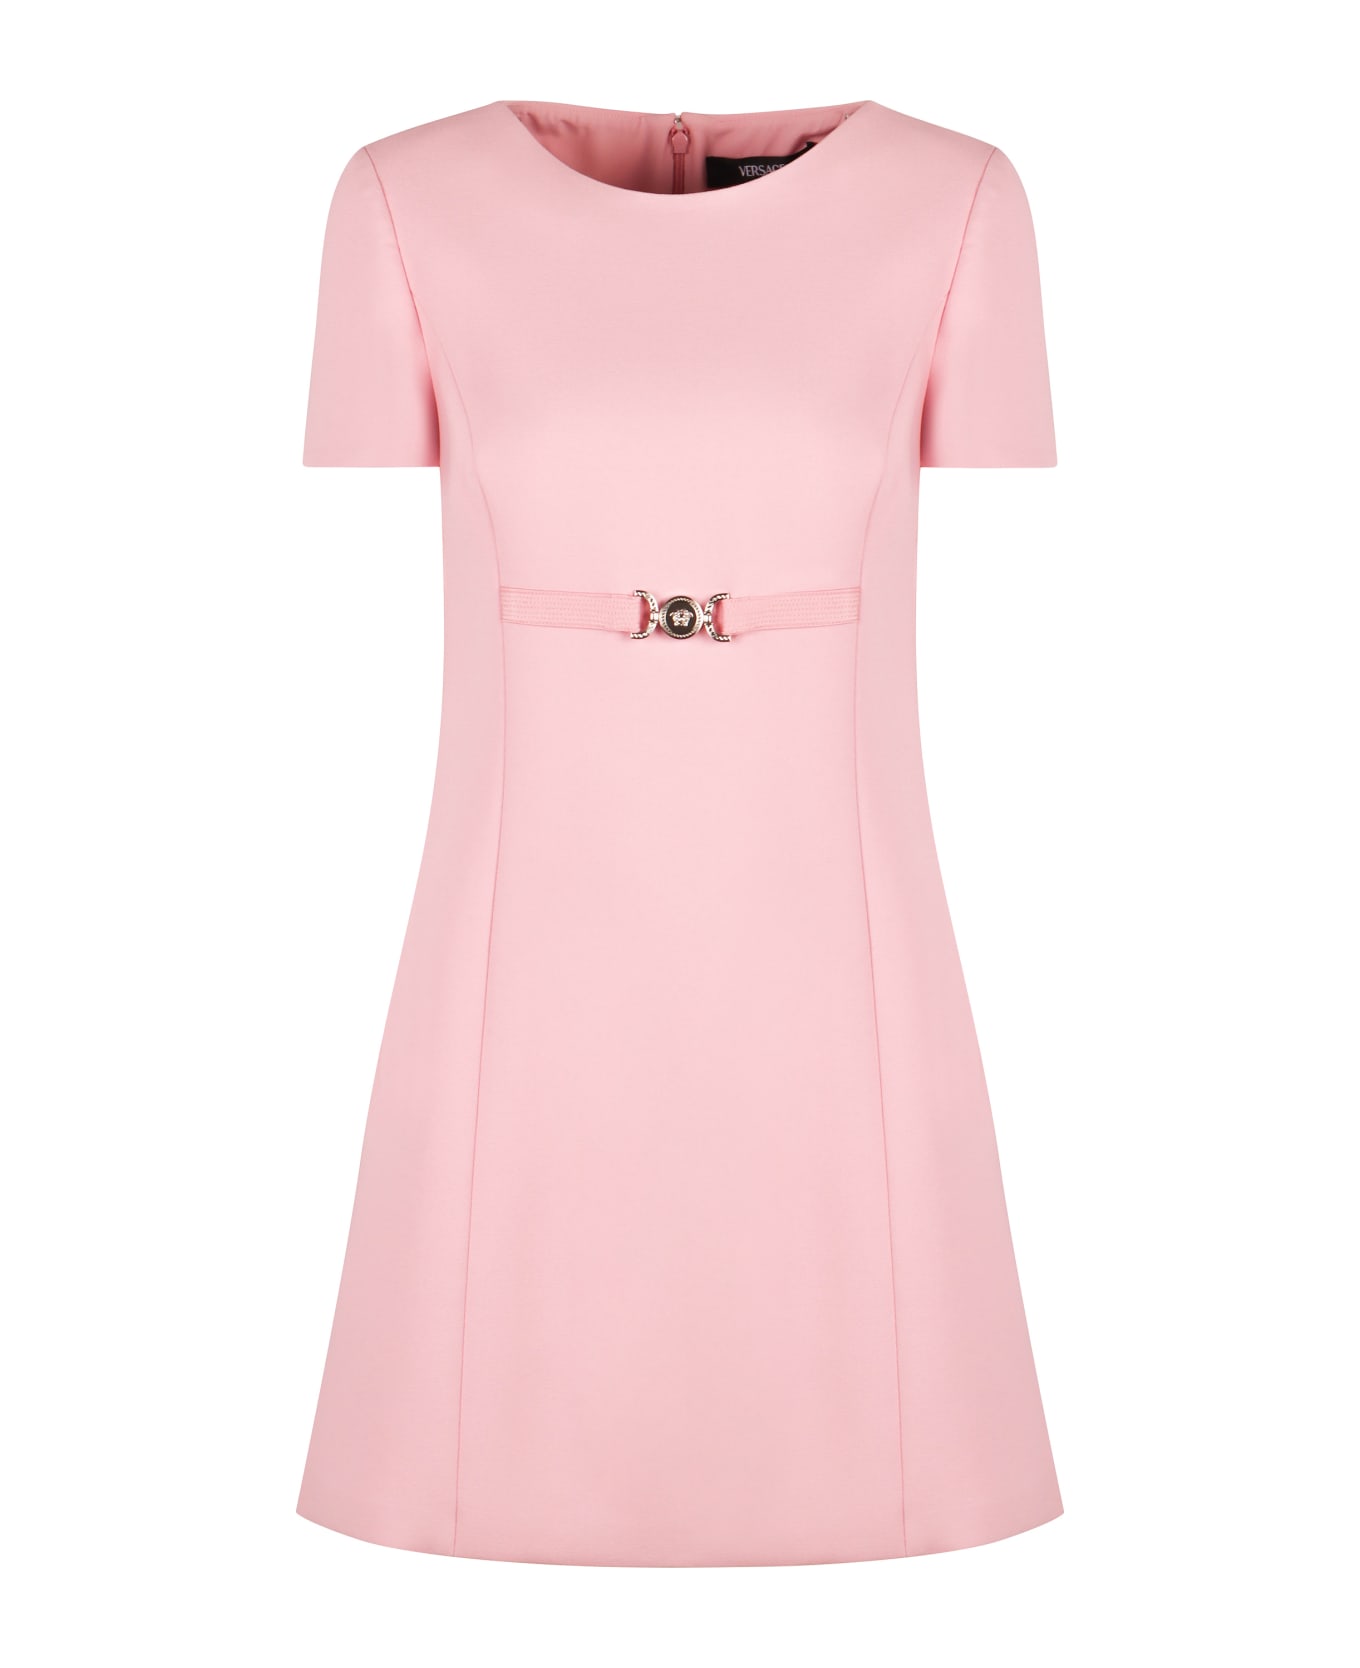 Versace Viscose Dress - Pink